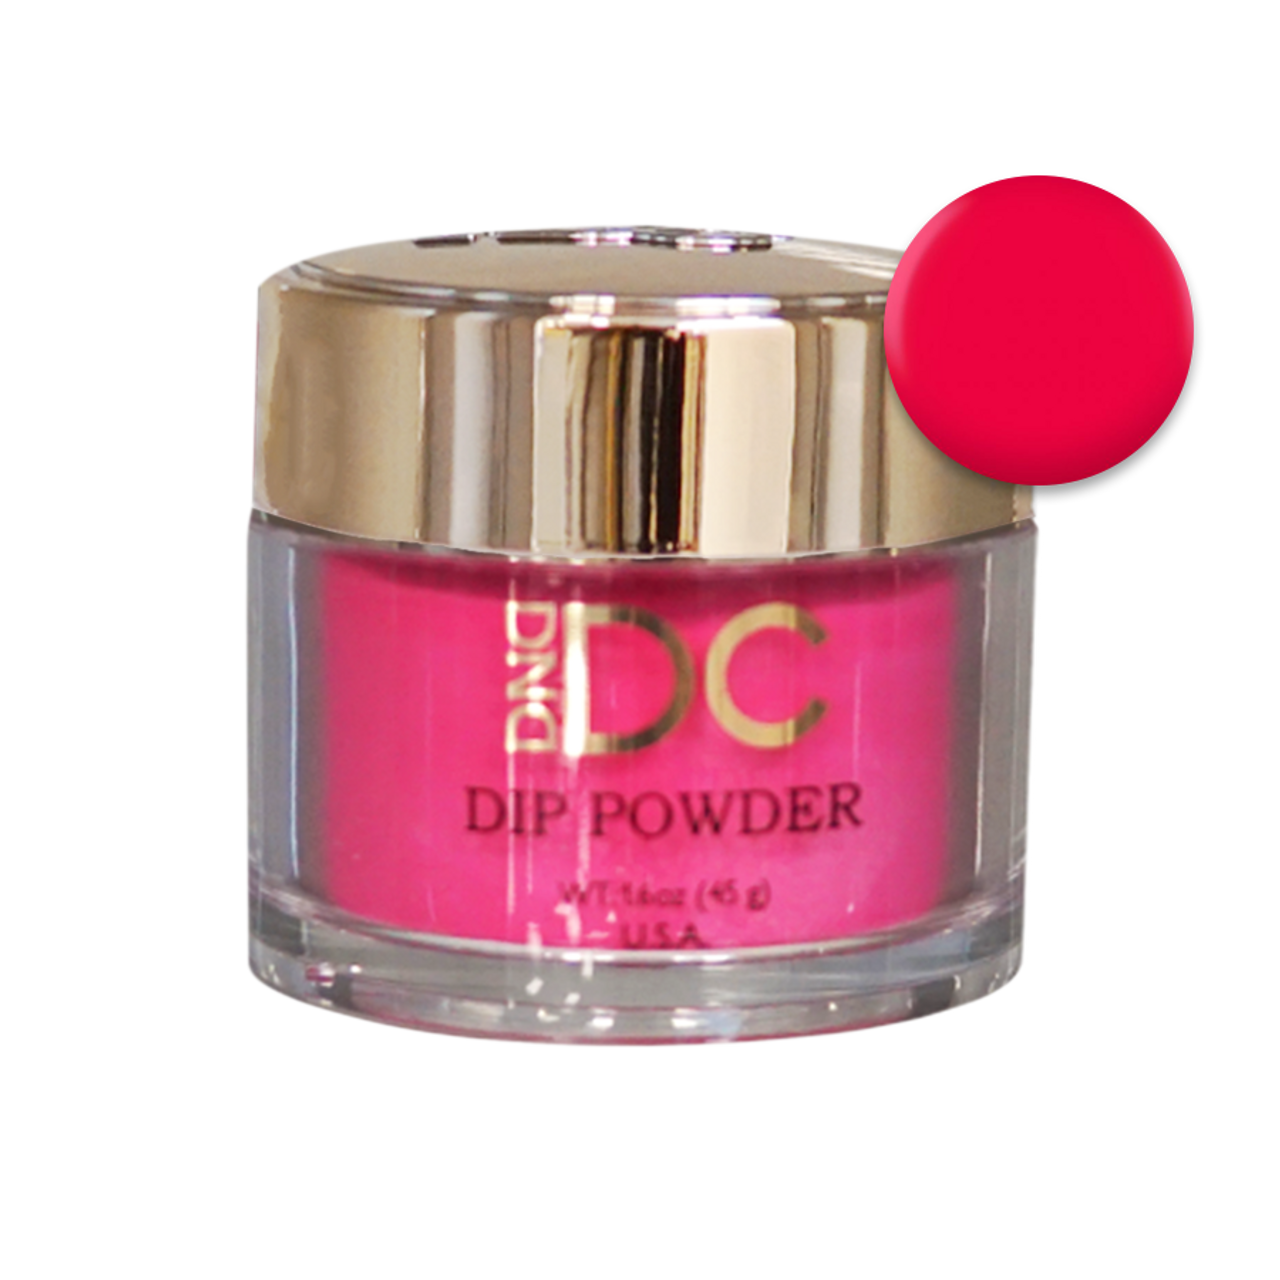 DNDDC - Dip Dap 006 Deep Pink